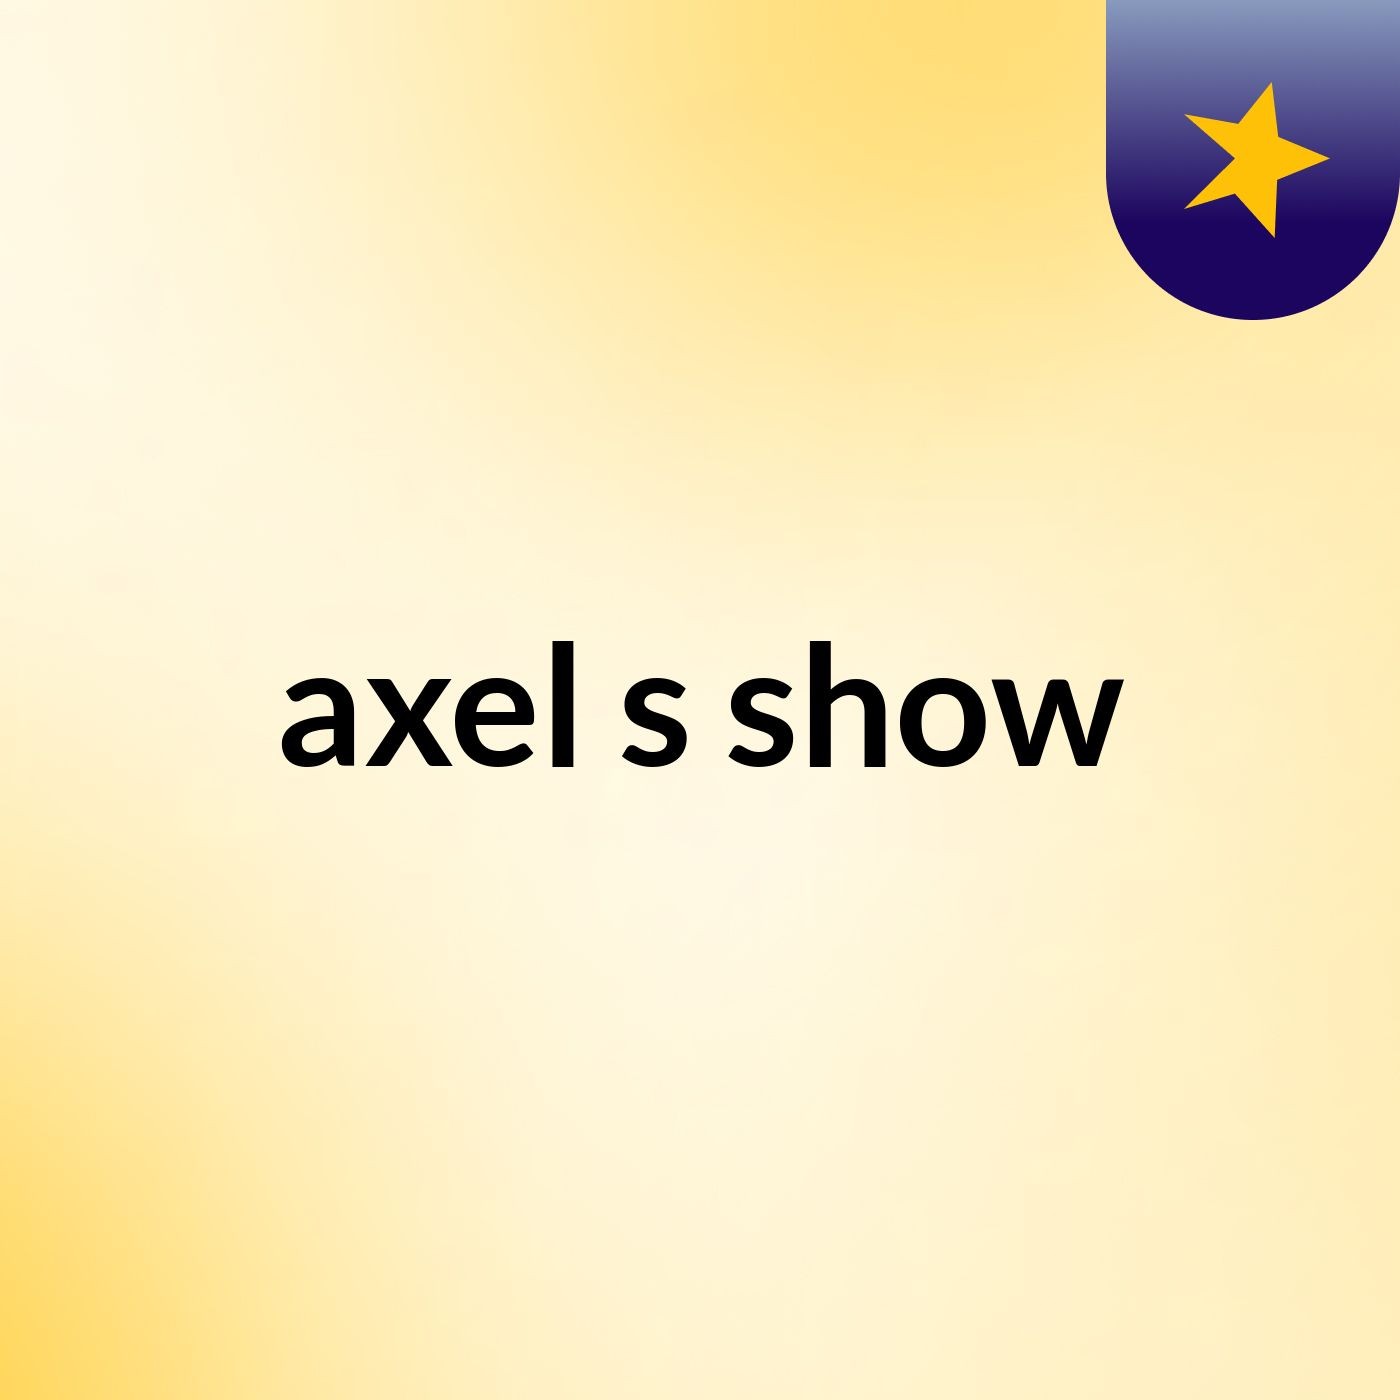 axel's show